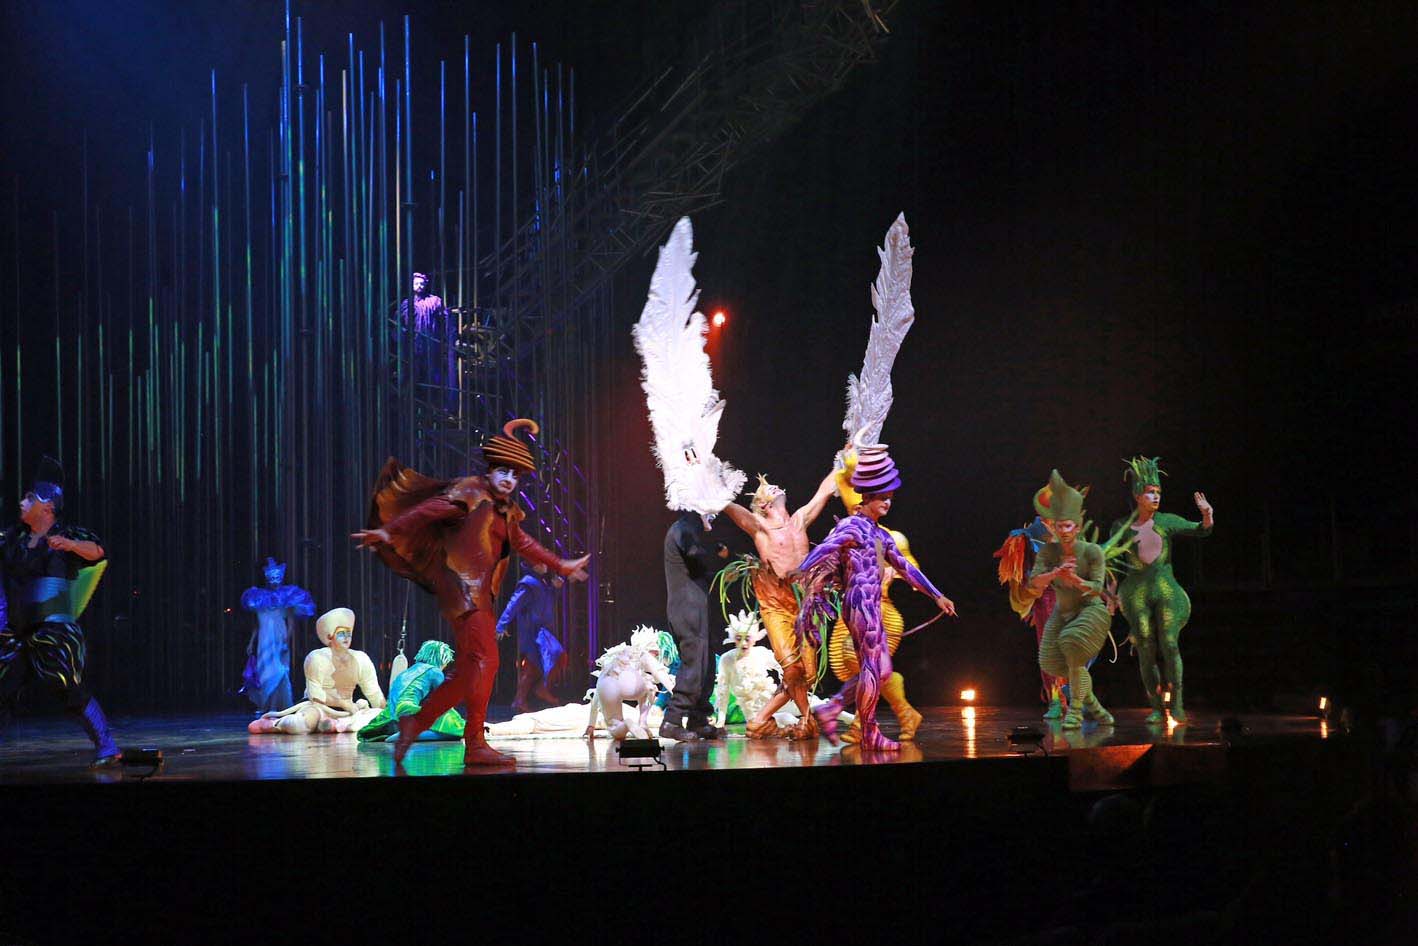 ''Cirque du Soleil''in TIR'lar snrda bekletiliyor